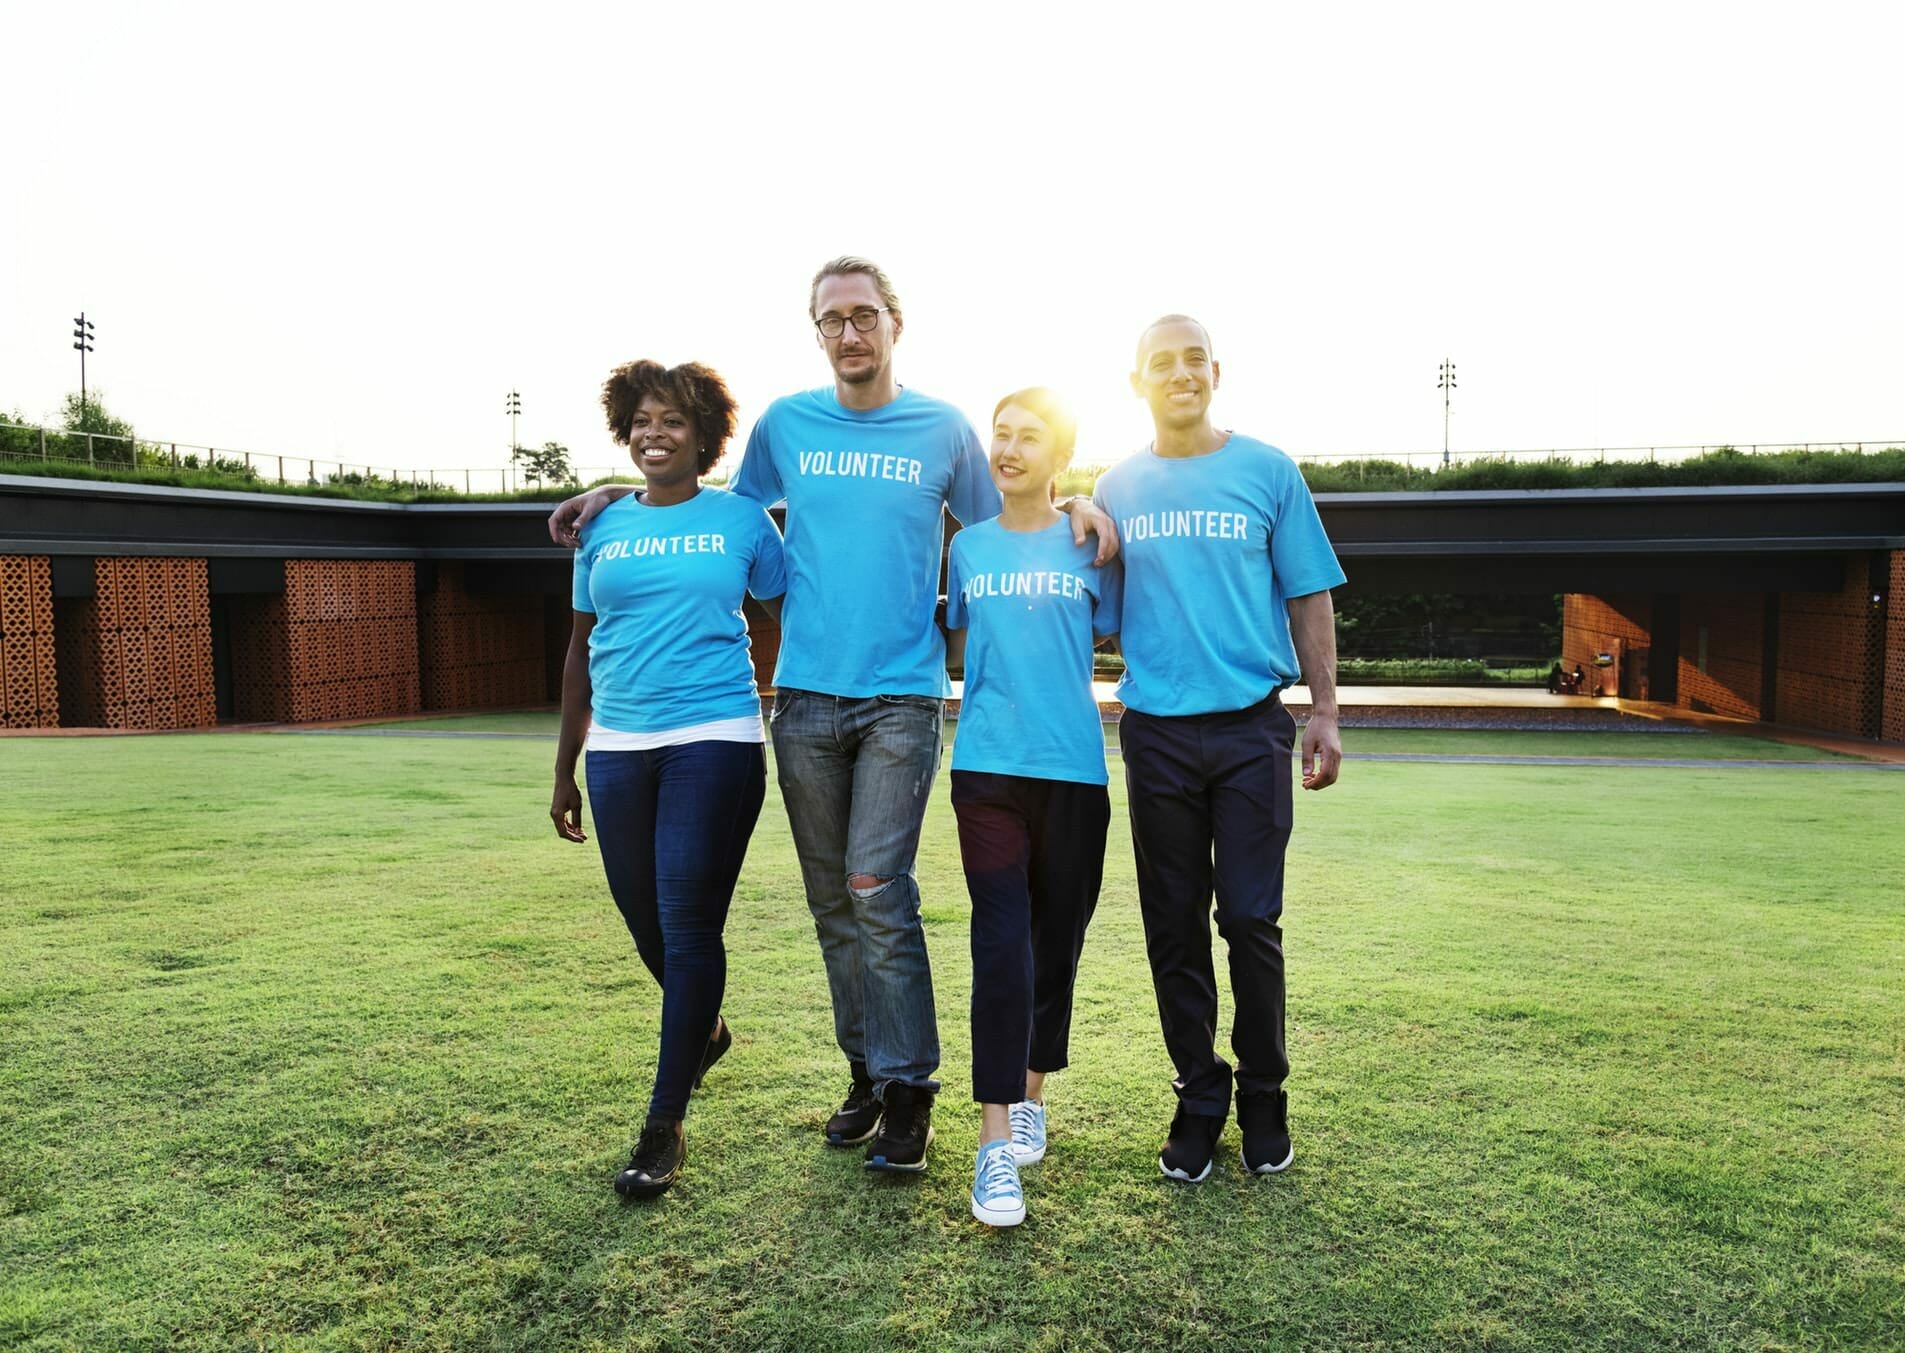 Alumni volunteer engagement: Image of four alumni volunteers in blue 